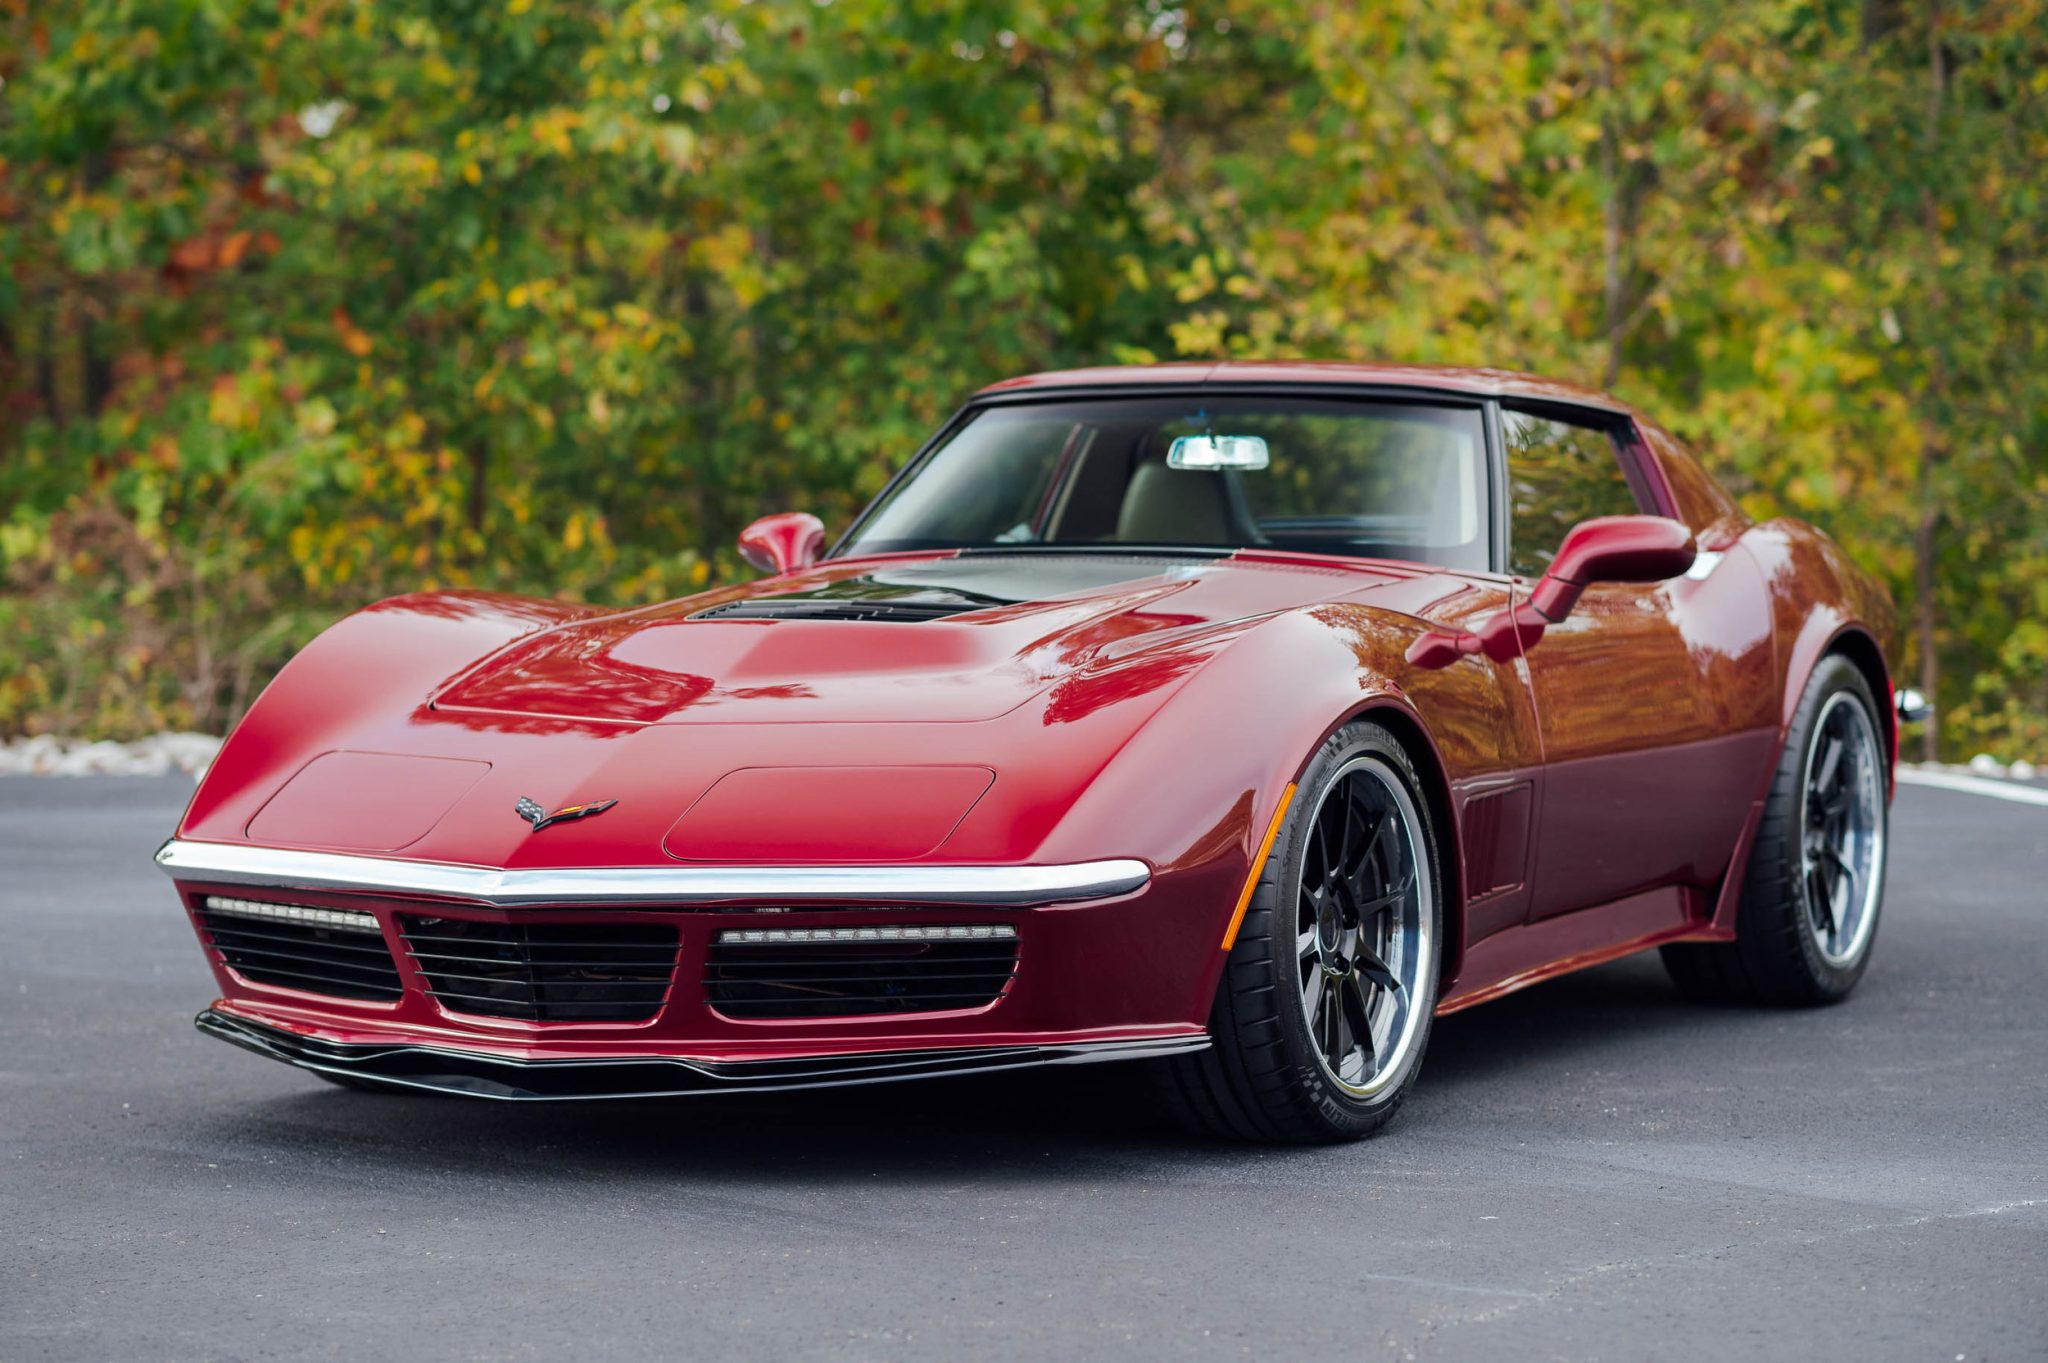 Corvette Of The Day: 1972 Corvette Restomod